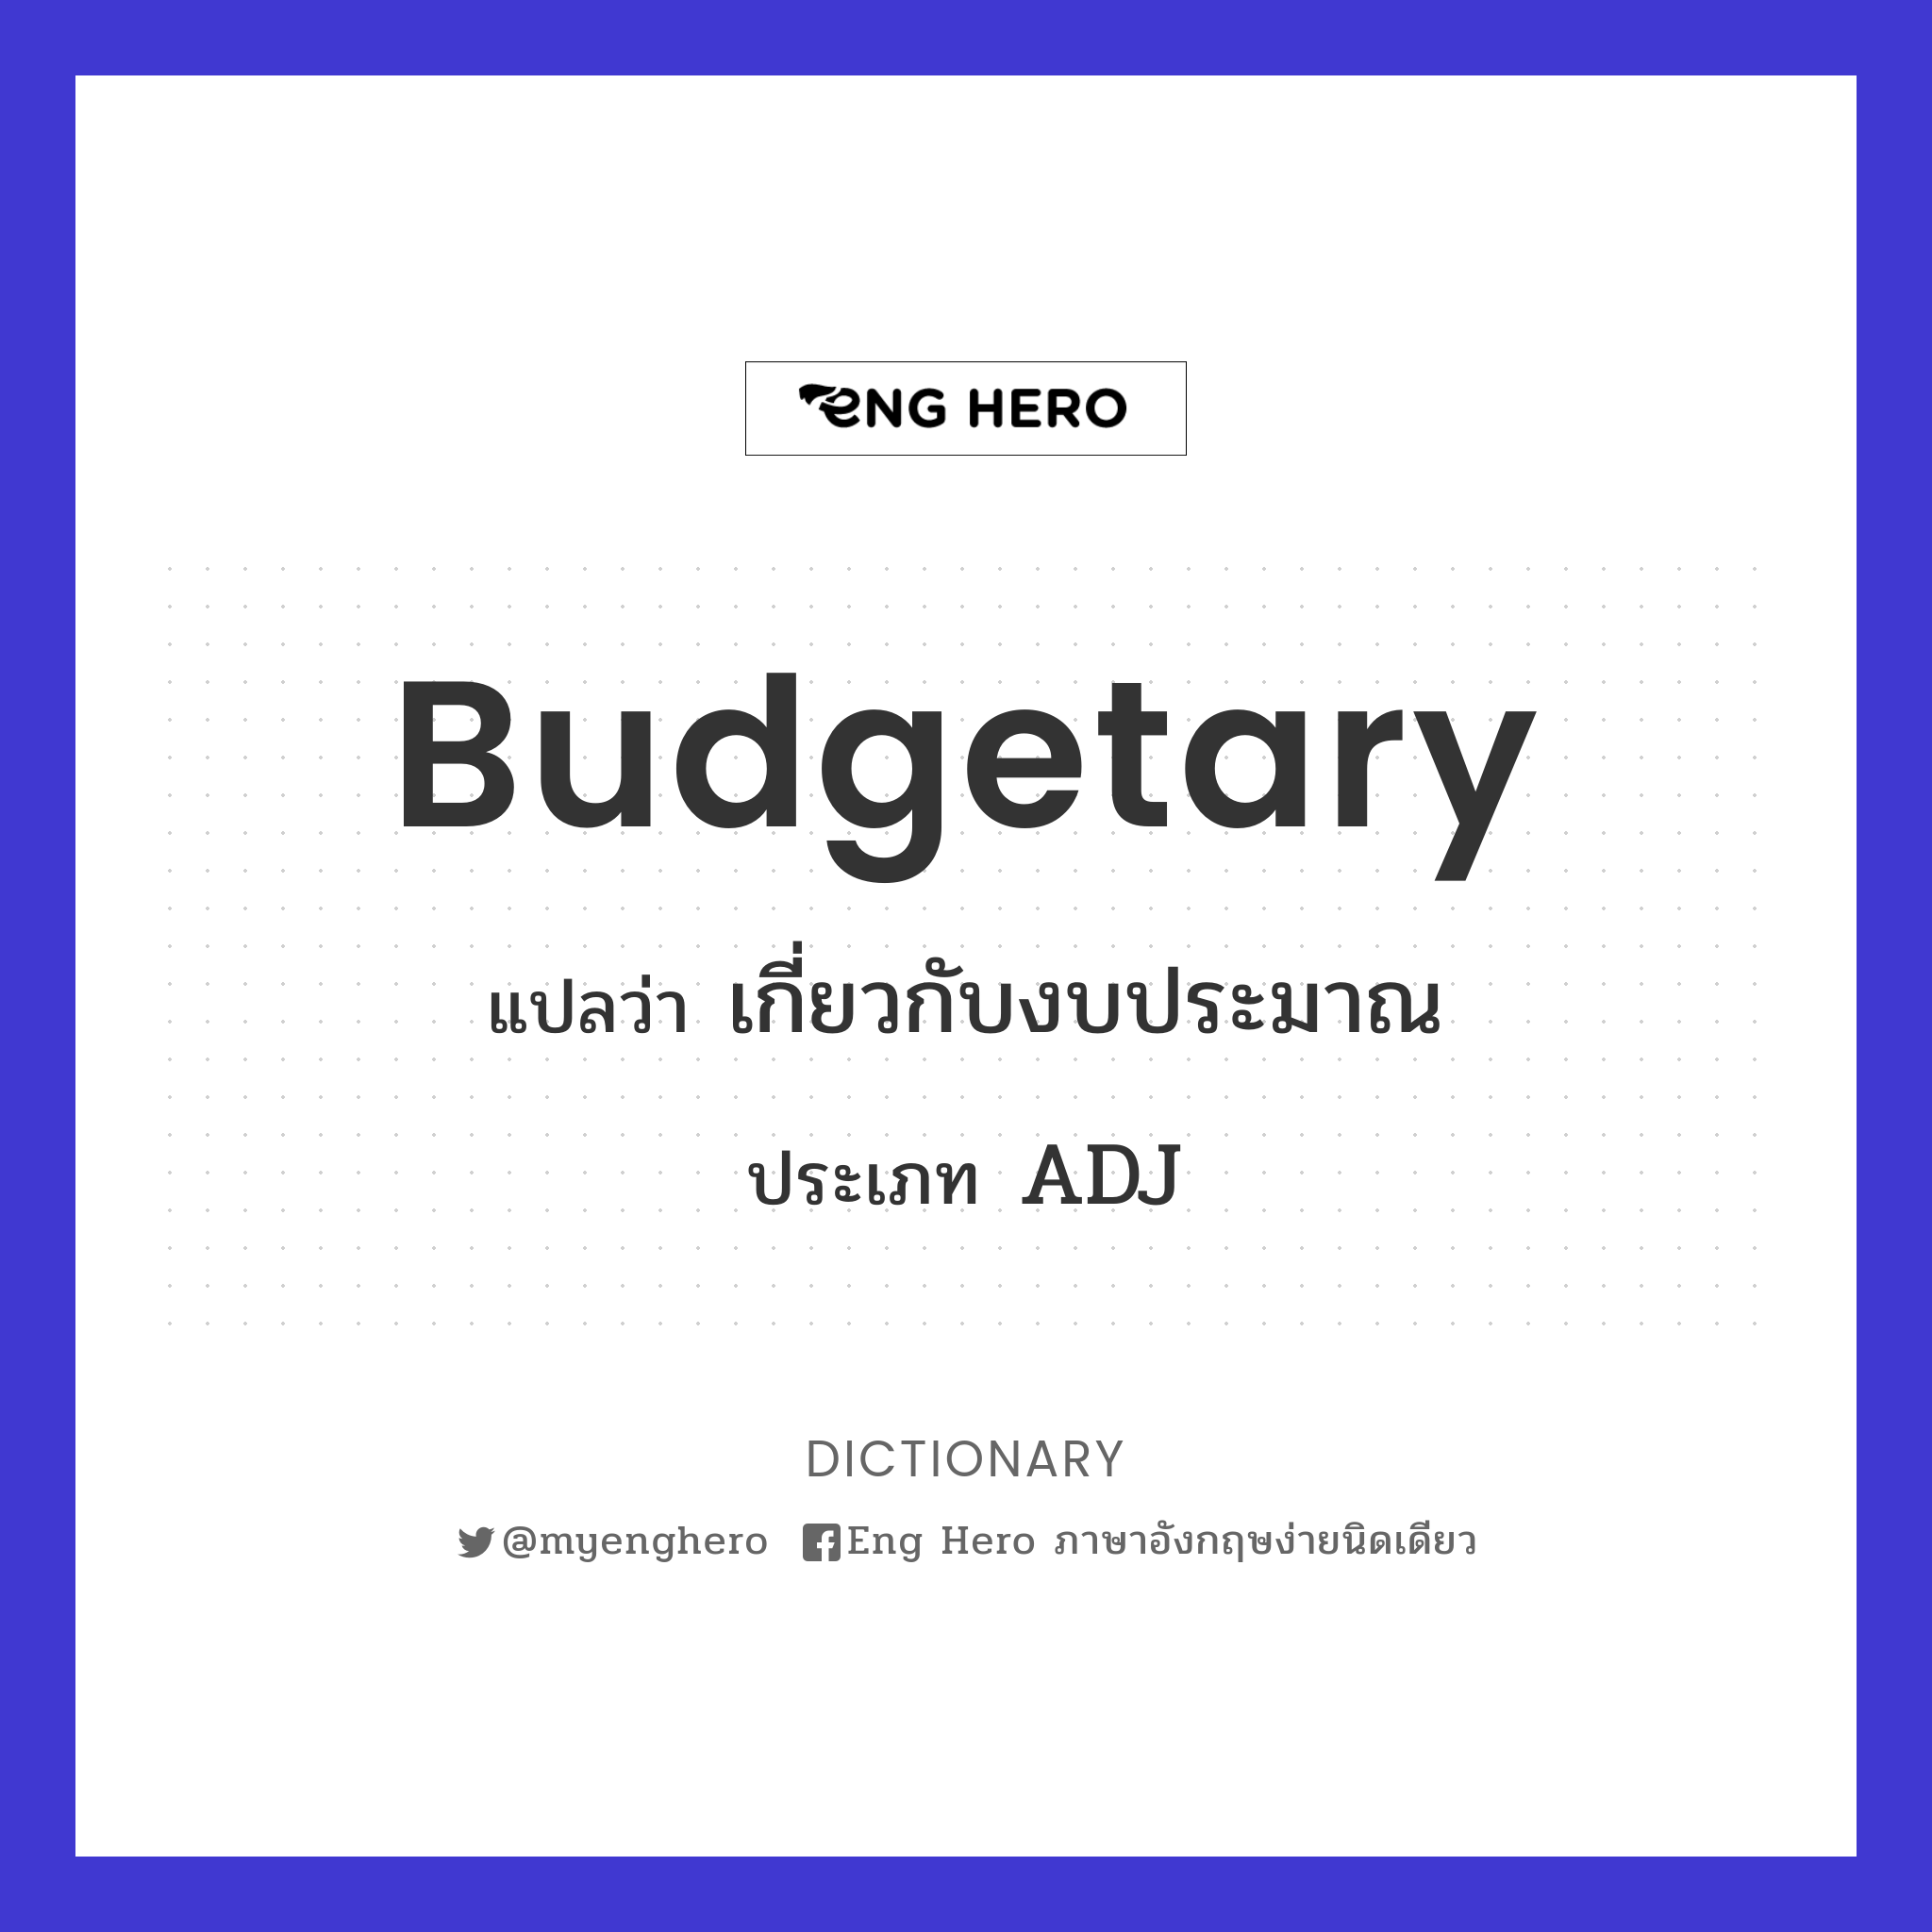 budgetary